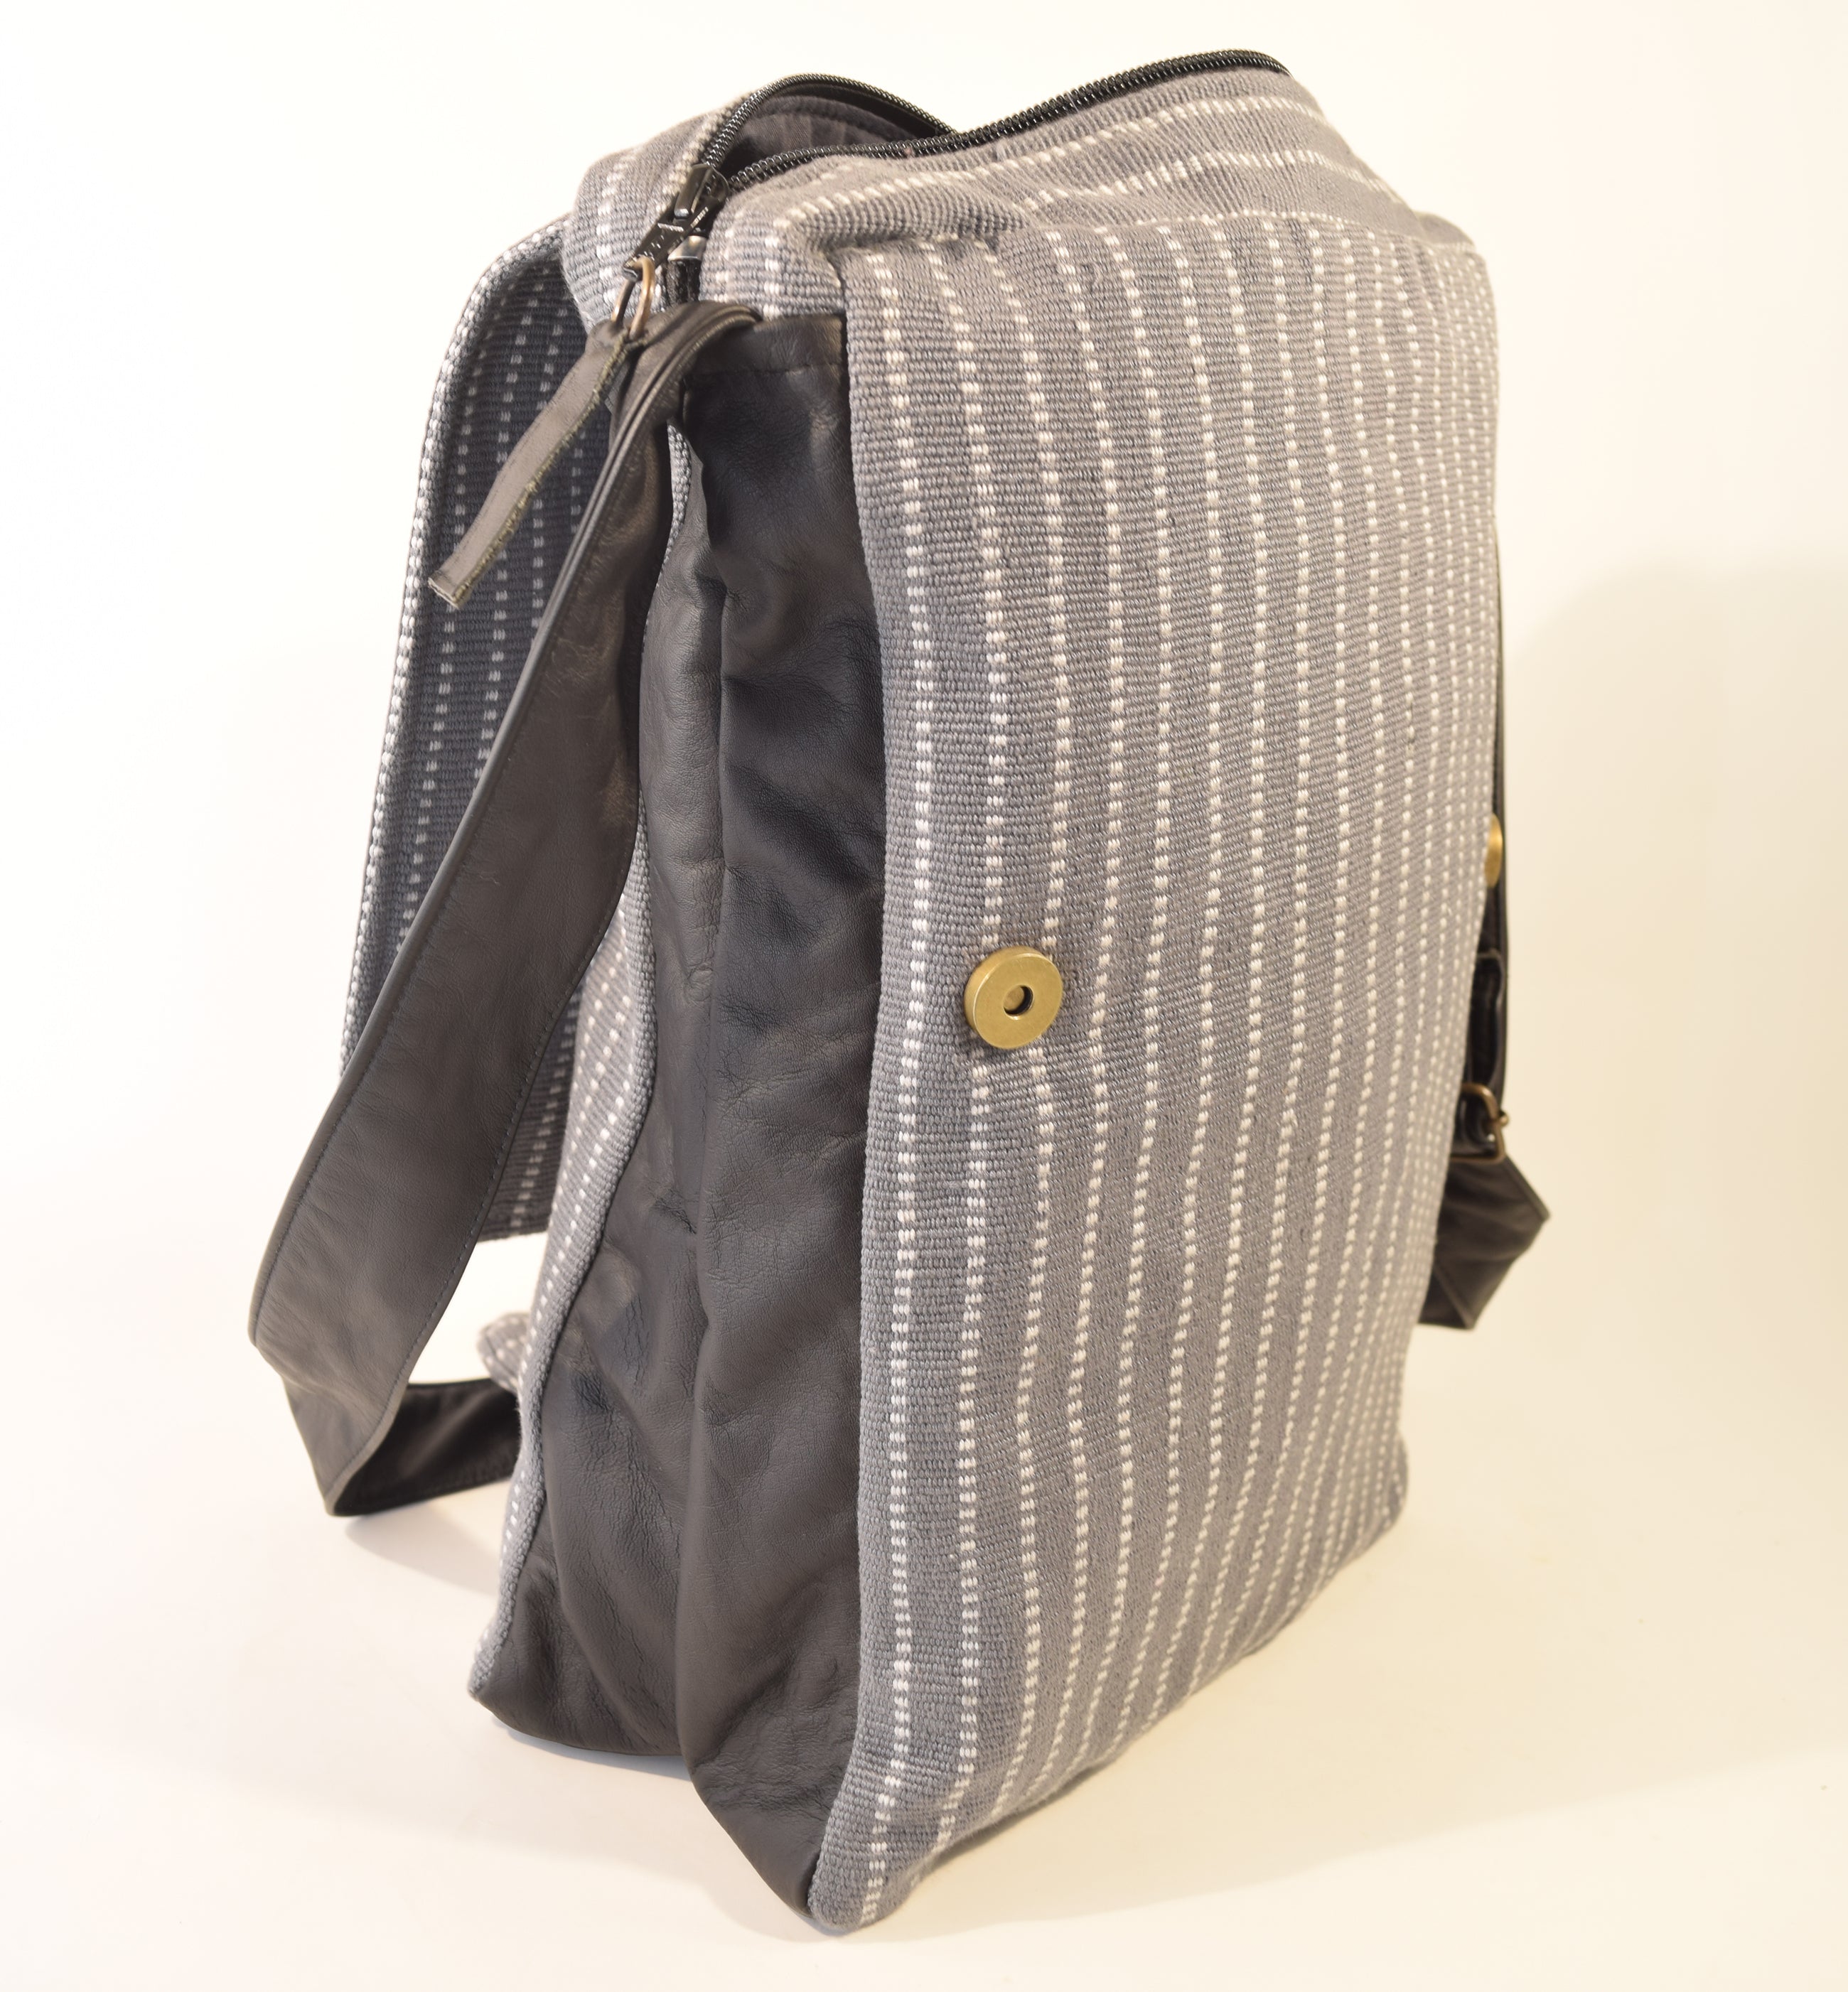 Yabal Grey/White Stripe Messenger Bag 